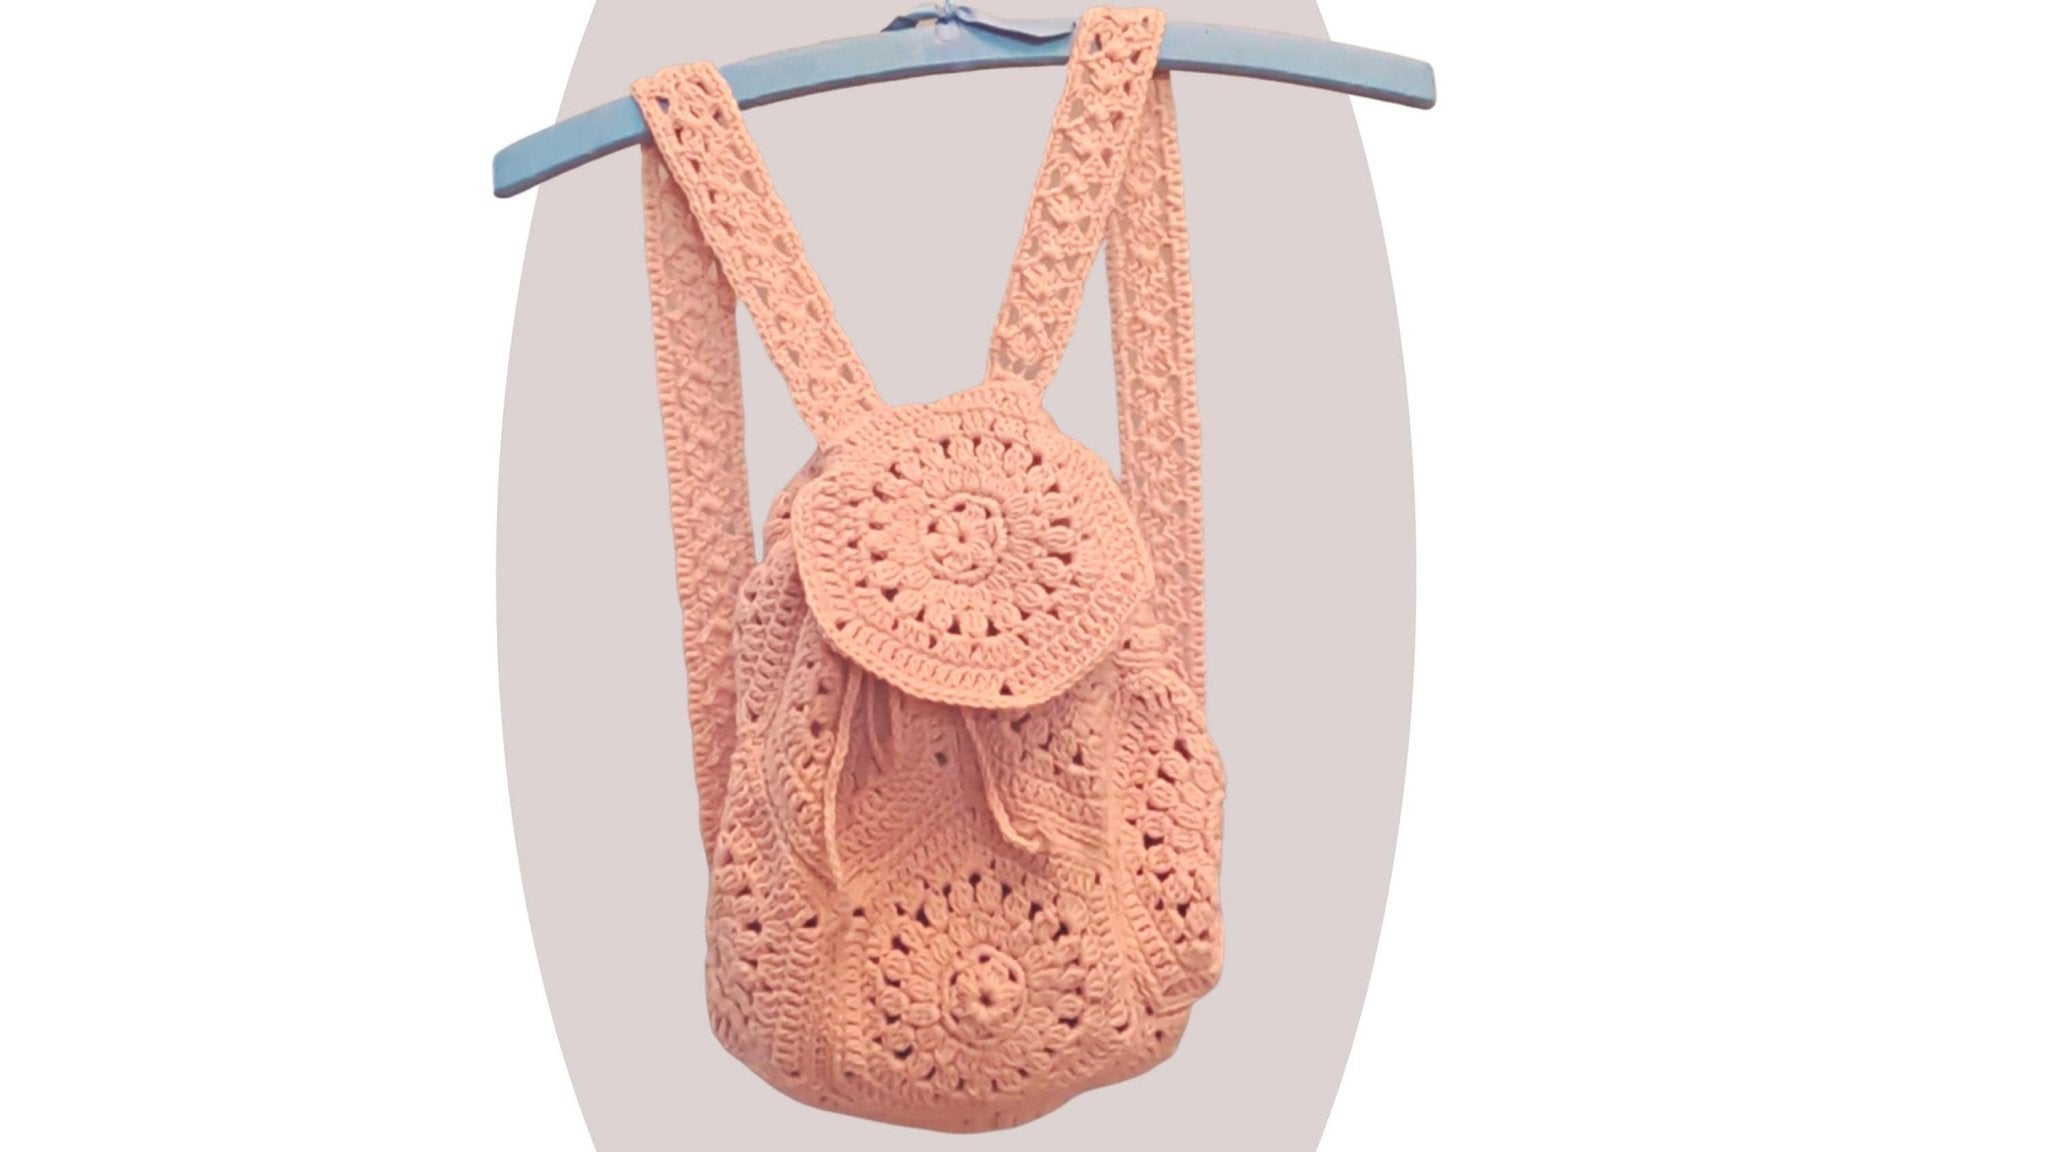 Crocheted Backpack – ByKaterina